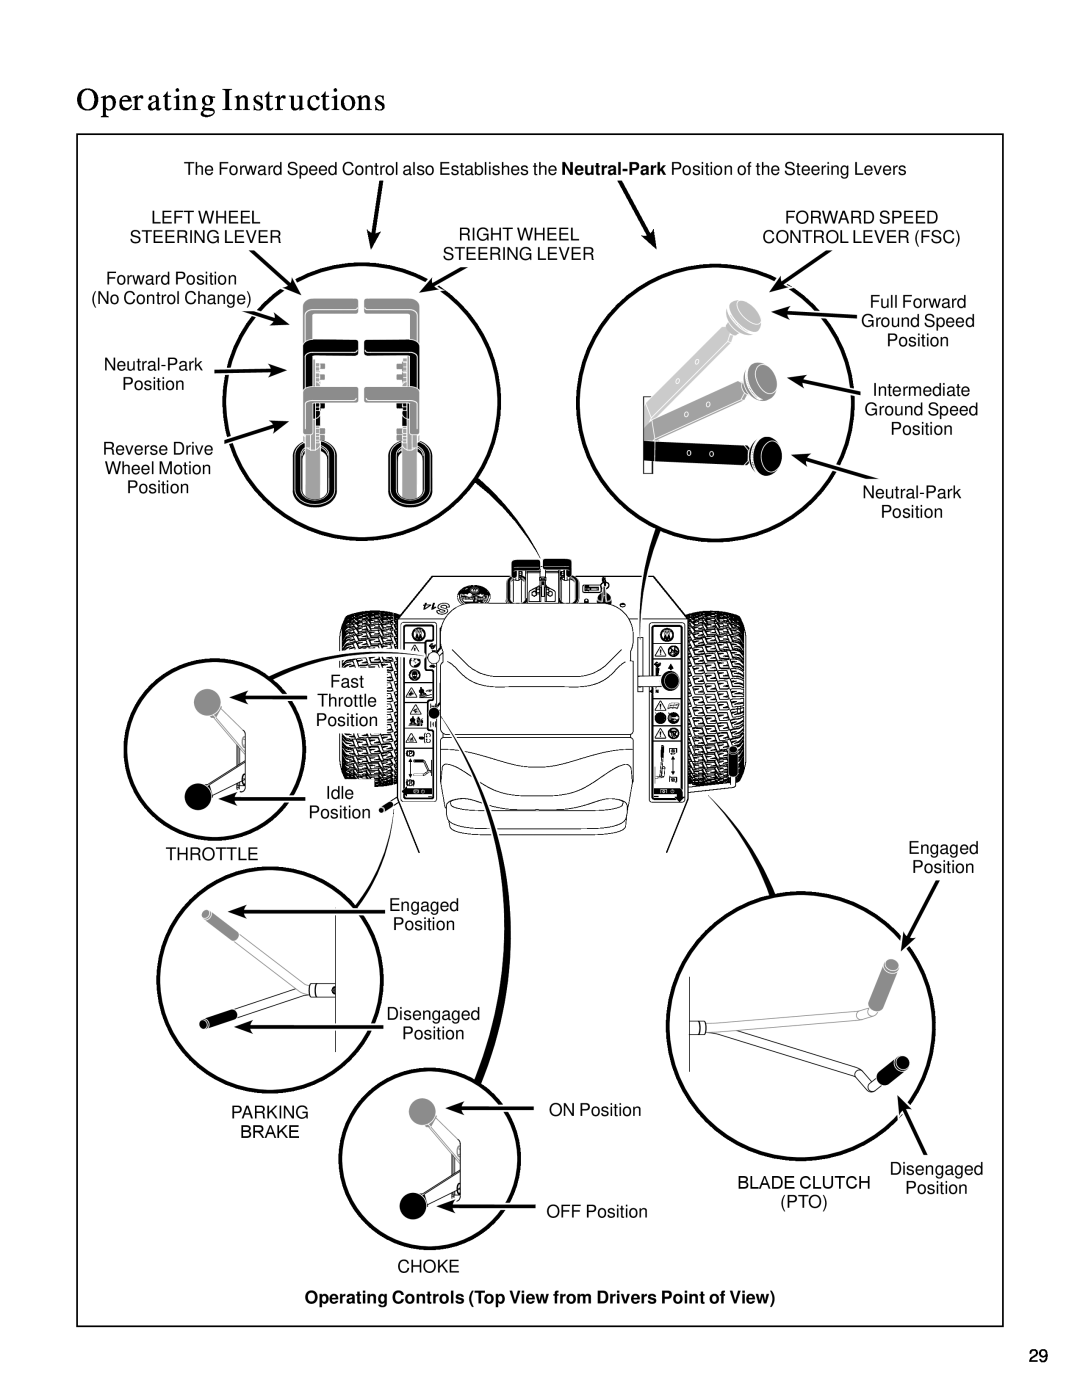 Walker S14 manual Operating Instructions, Left Wheel Steering Leverright Wheel 